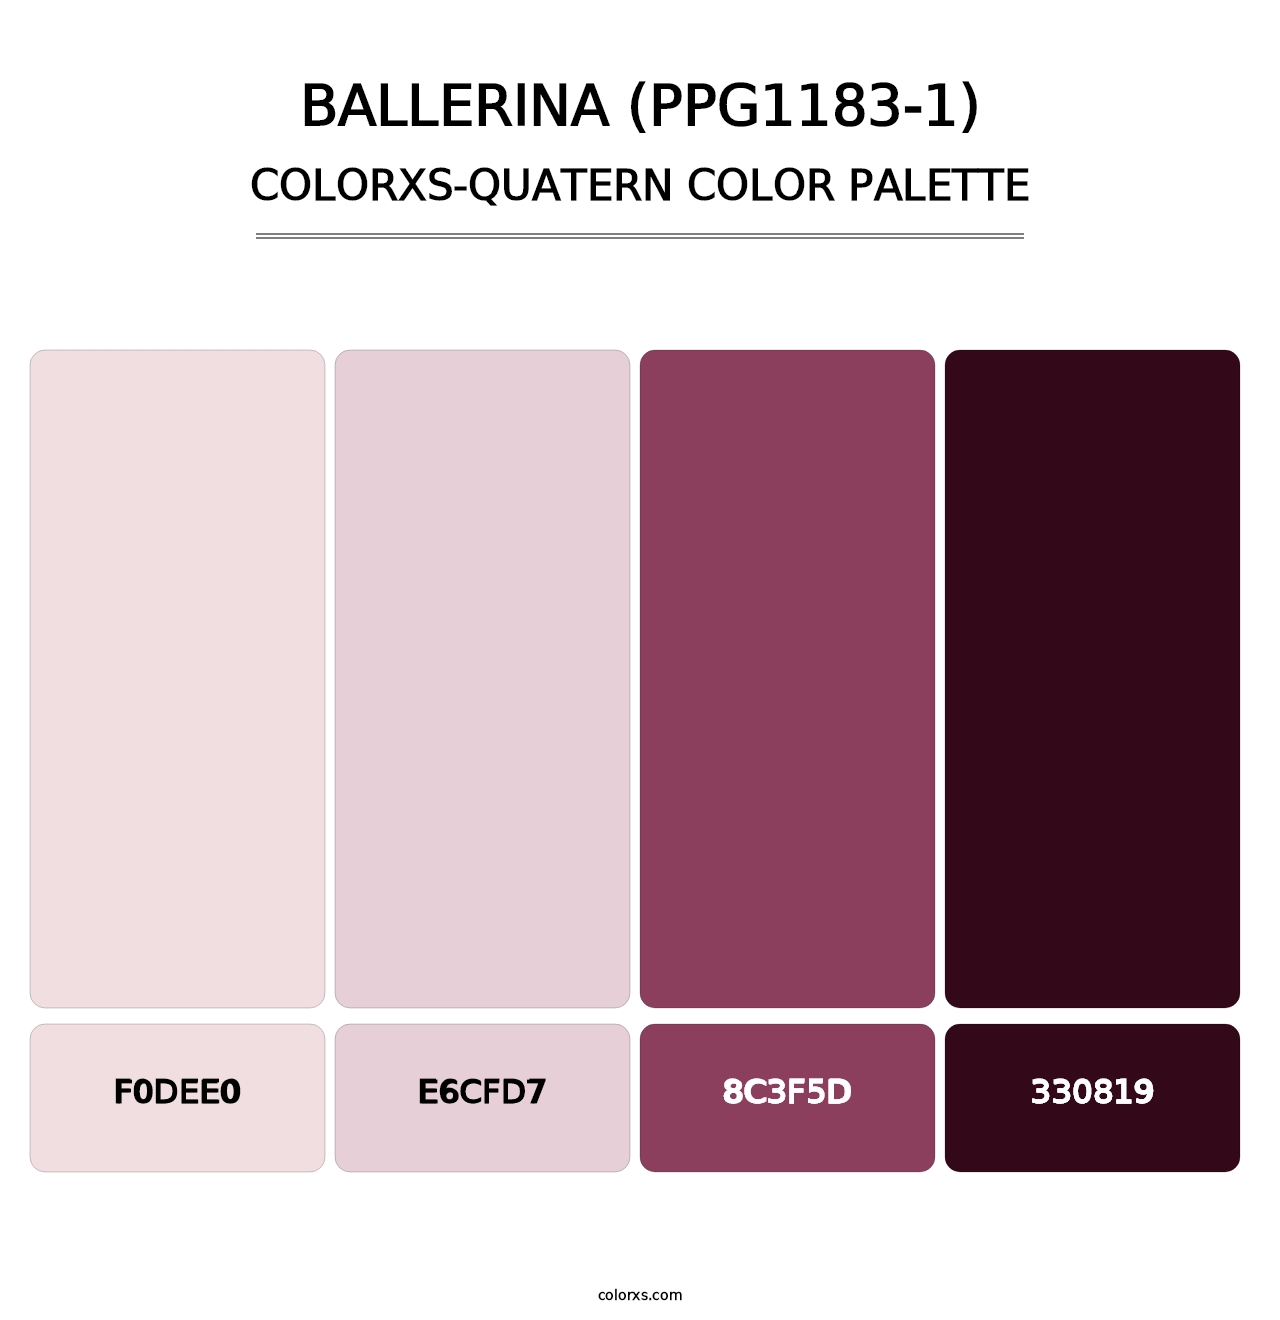 Ballerina (PPG1183-1) - Colorxs Quatern Palette